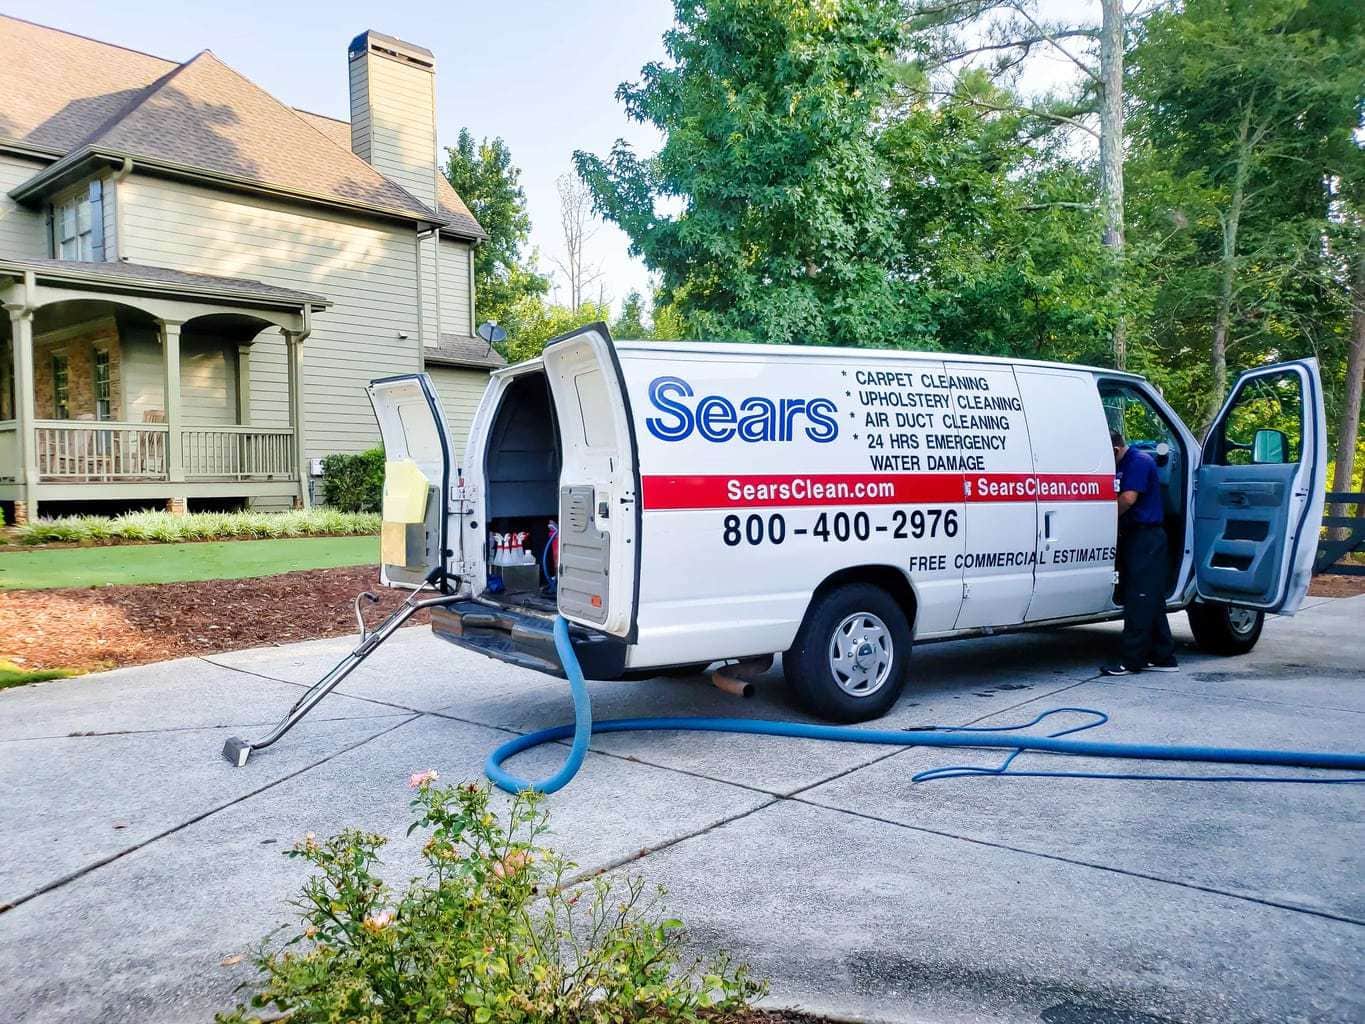 Sears Carpet Cleaning Atlanta coupon discount